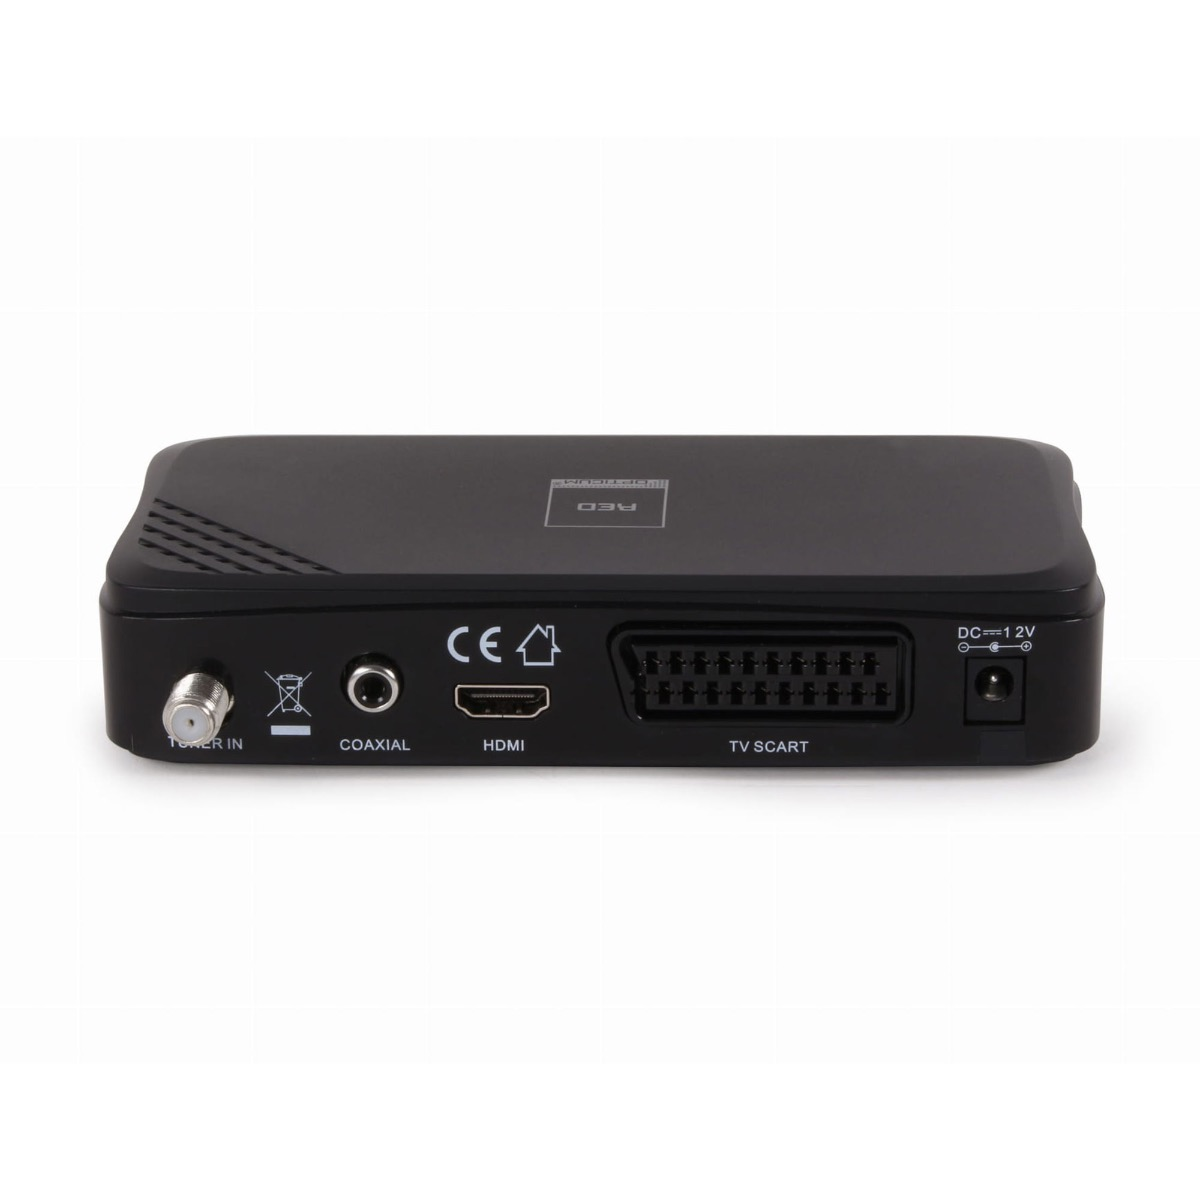 COMAG HD45 Satellitenreceiver (HDTV, DVB-S, DVB-S2, schwarz)